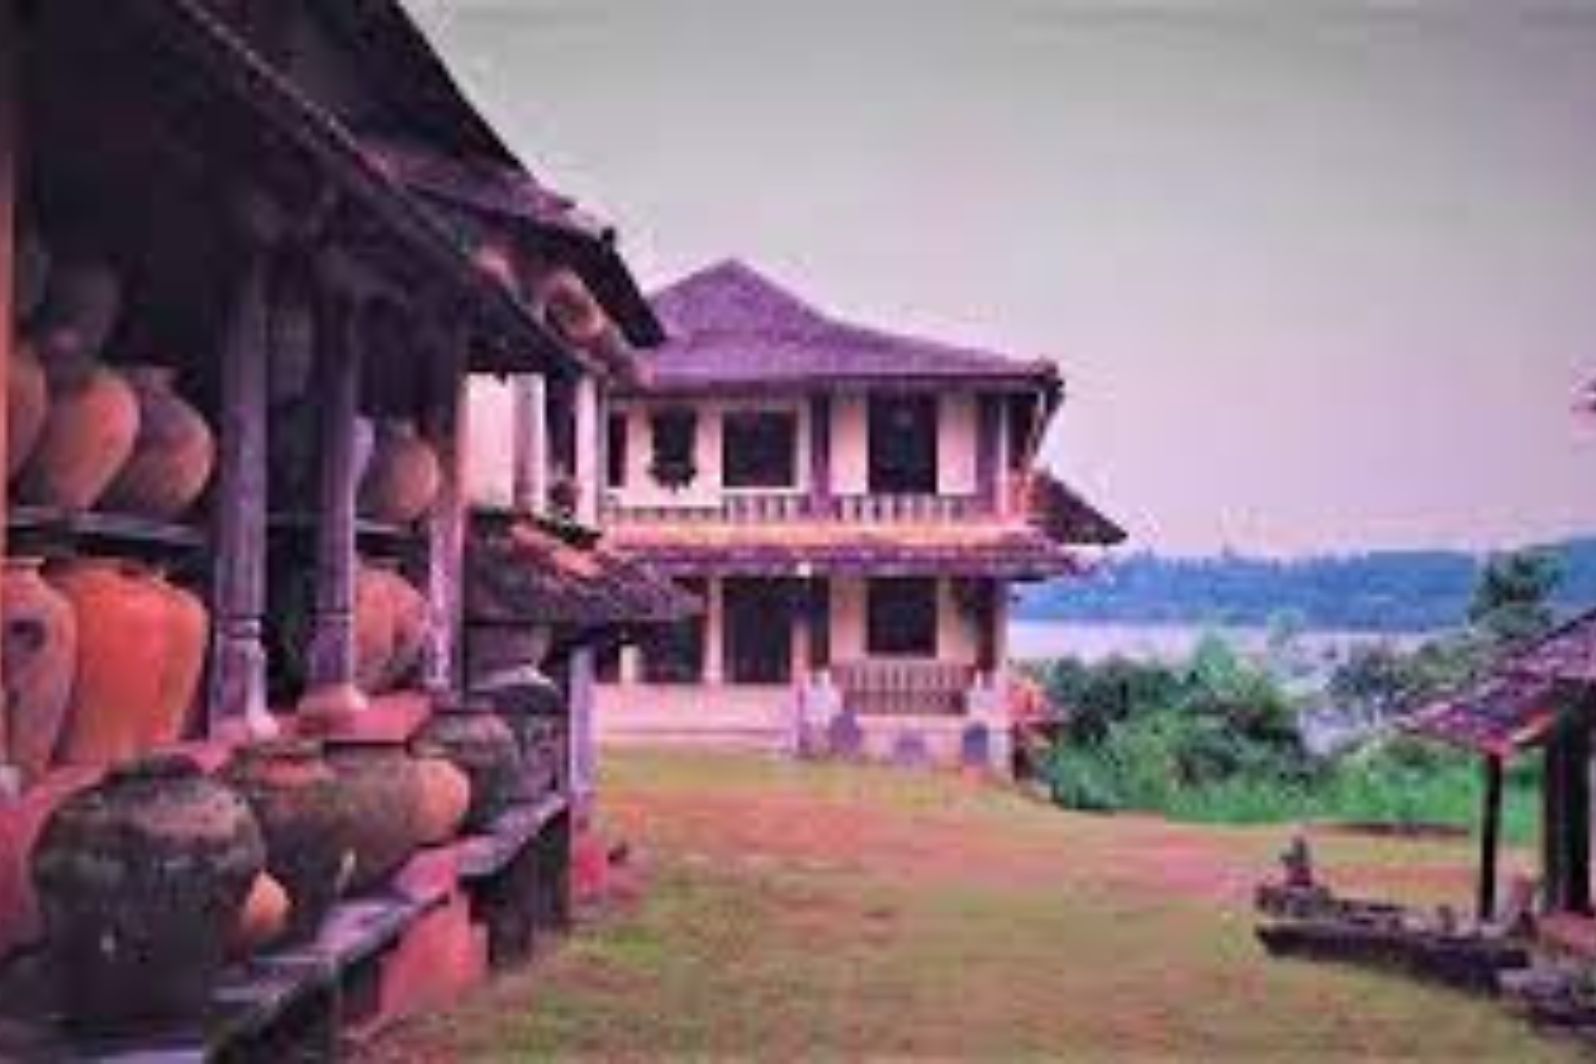 hasta shilpa heritage village museum in Manipal